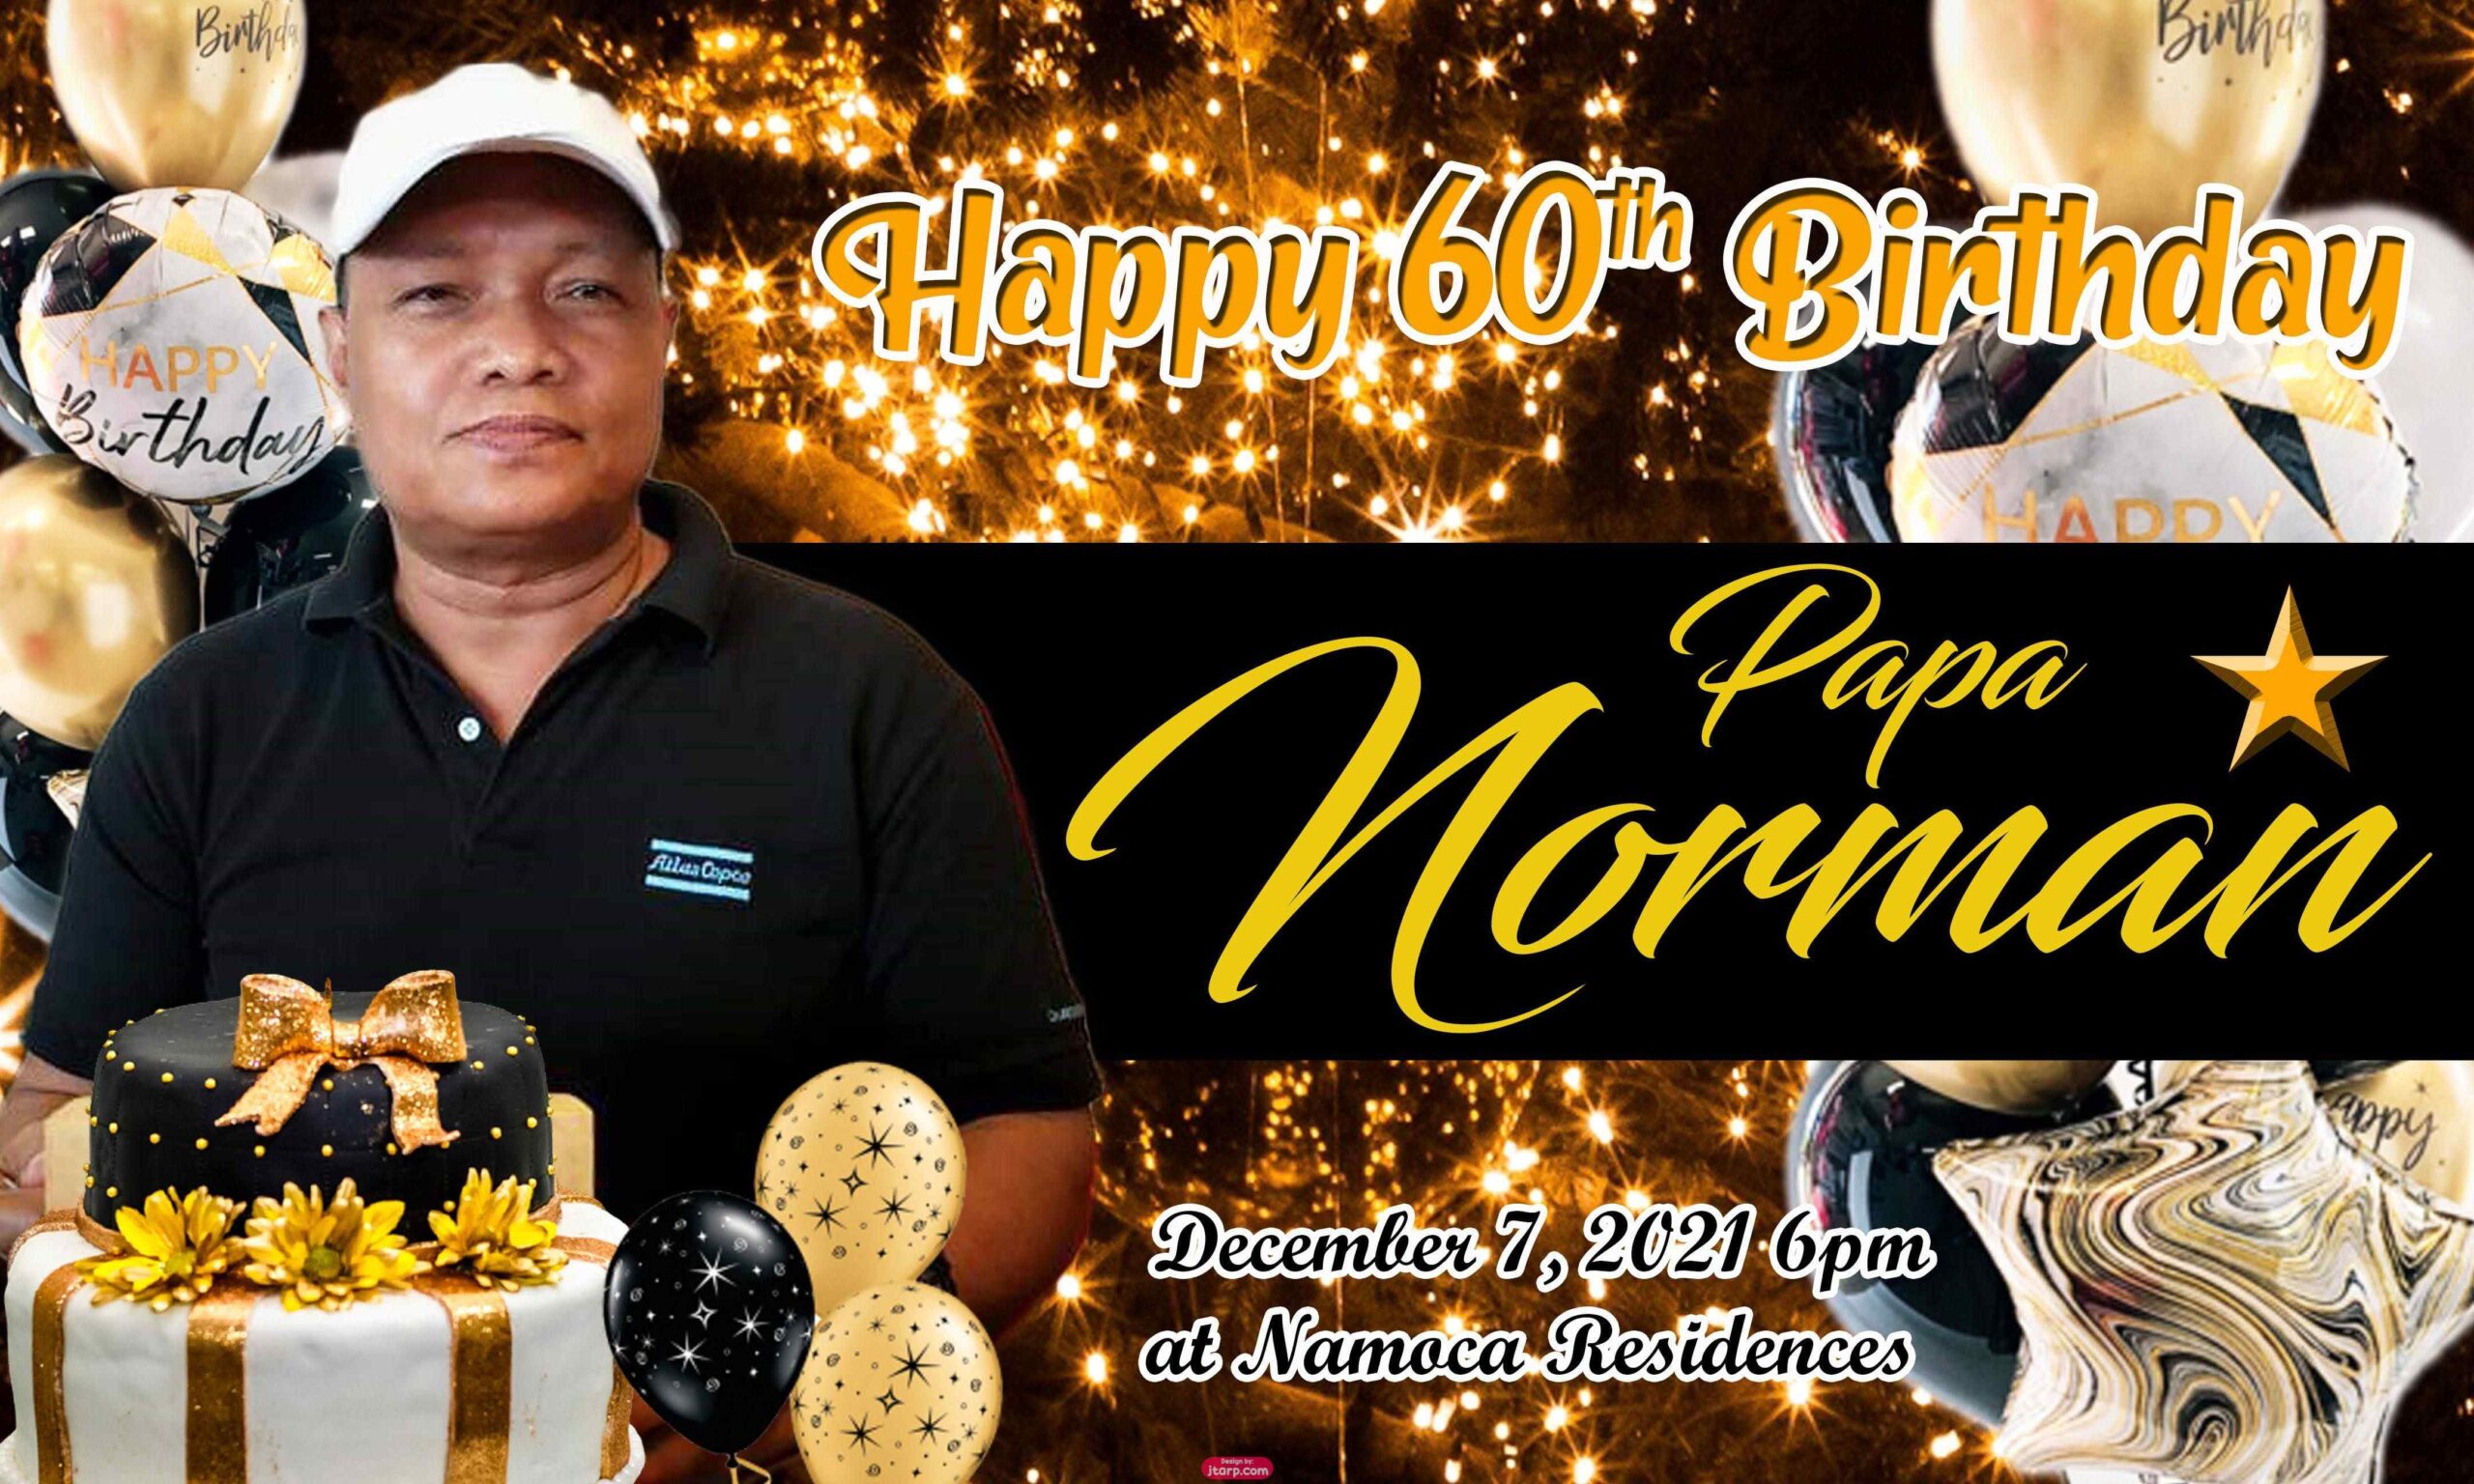 Happy 60th Birthday Papa Norman Scaled 